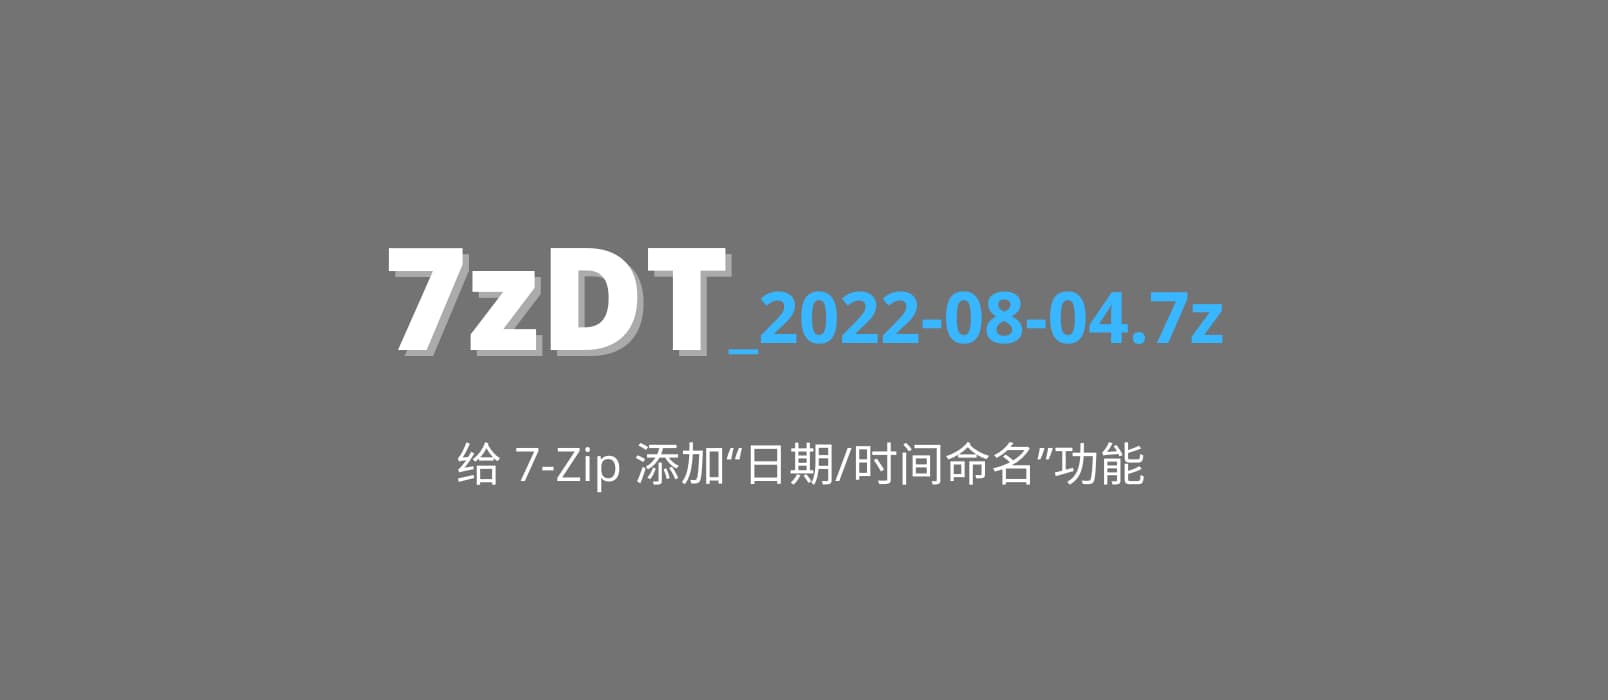 7zDT – 给 7-Zip 压缩界面添加“日期/时间命名”功能